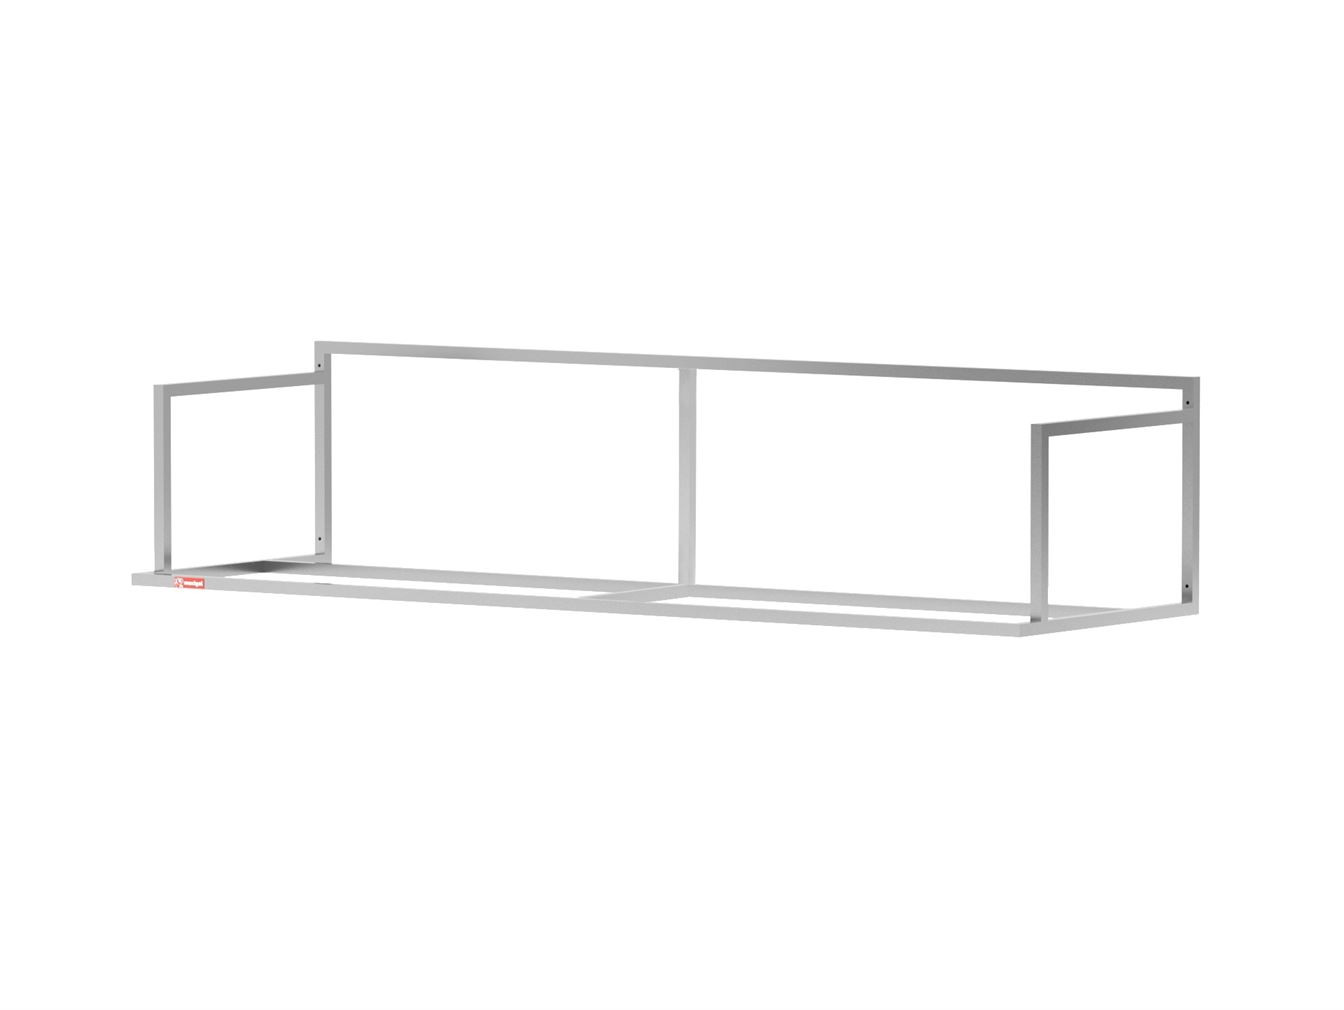 Raft depozitare - etajera otel inox AISI 304 pentru cosuri masina de spalat, suspendat de perete, dimensiuni 2900x510x370 mm